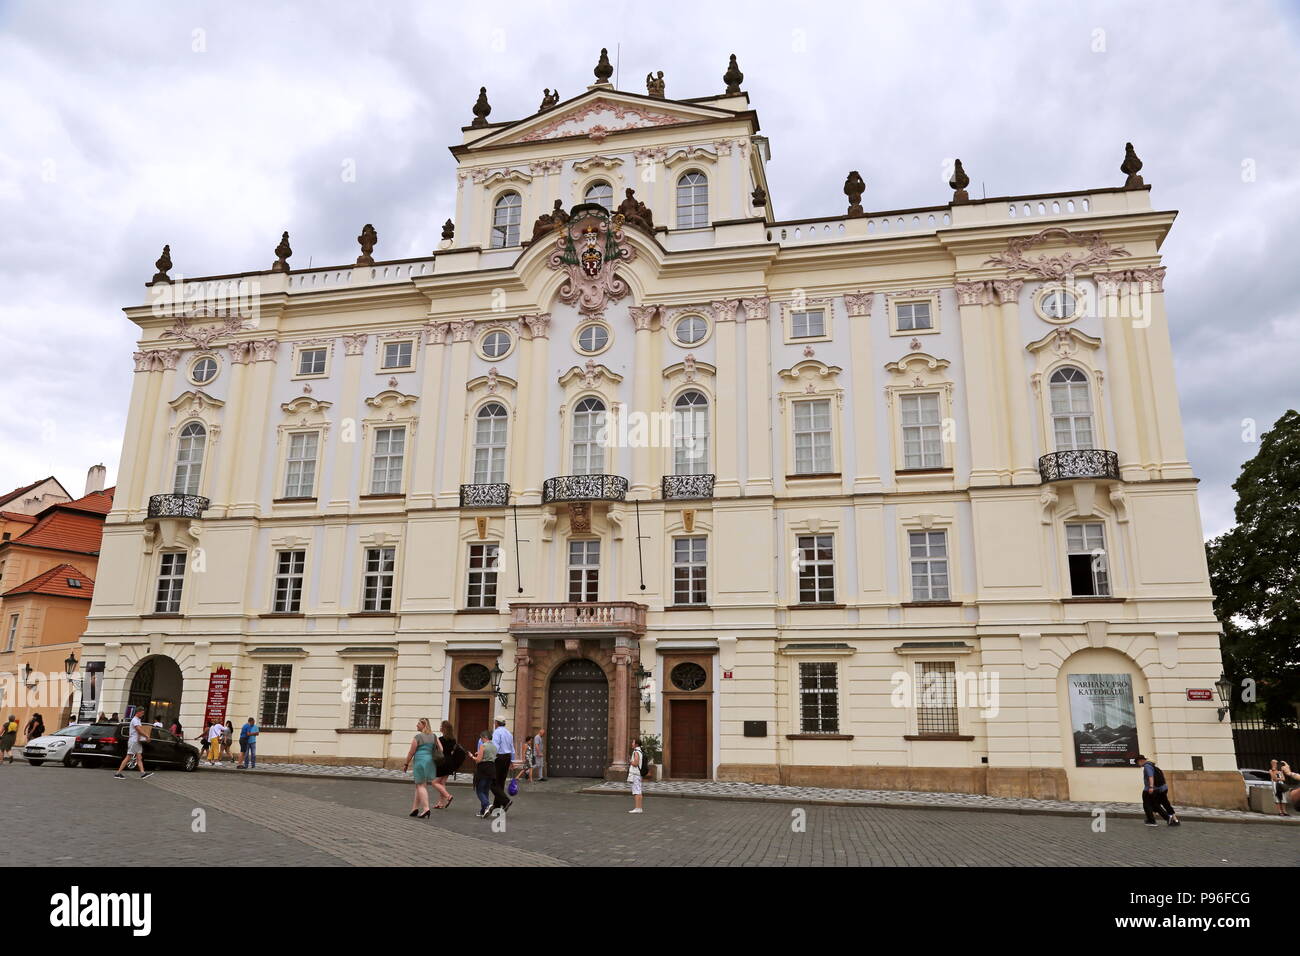 Erzbischof's Palace, hradčanské Náměstí, Hradschin, Prag, Tschechien (Tschechische Republik), Europa Stockfoto